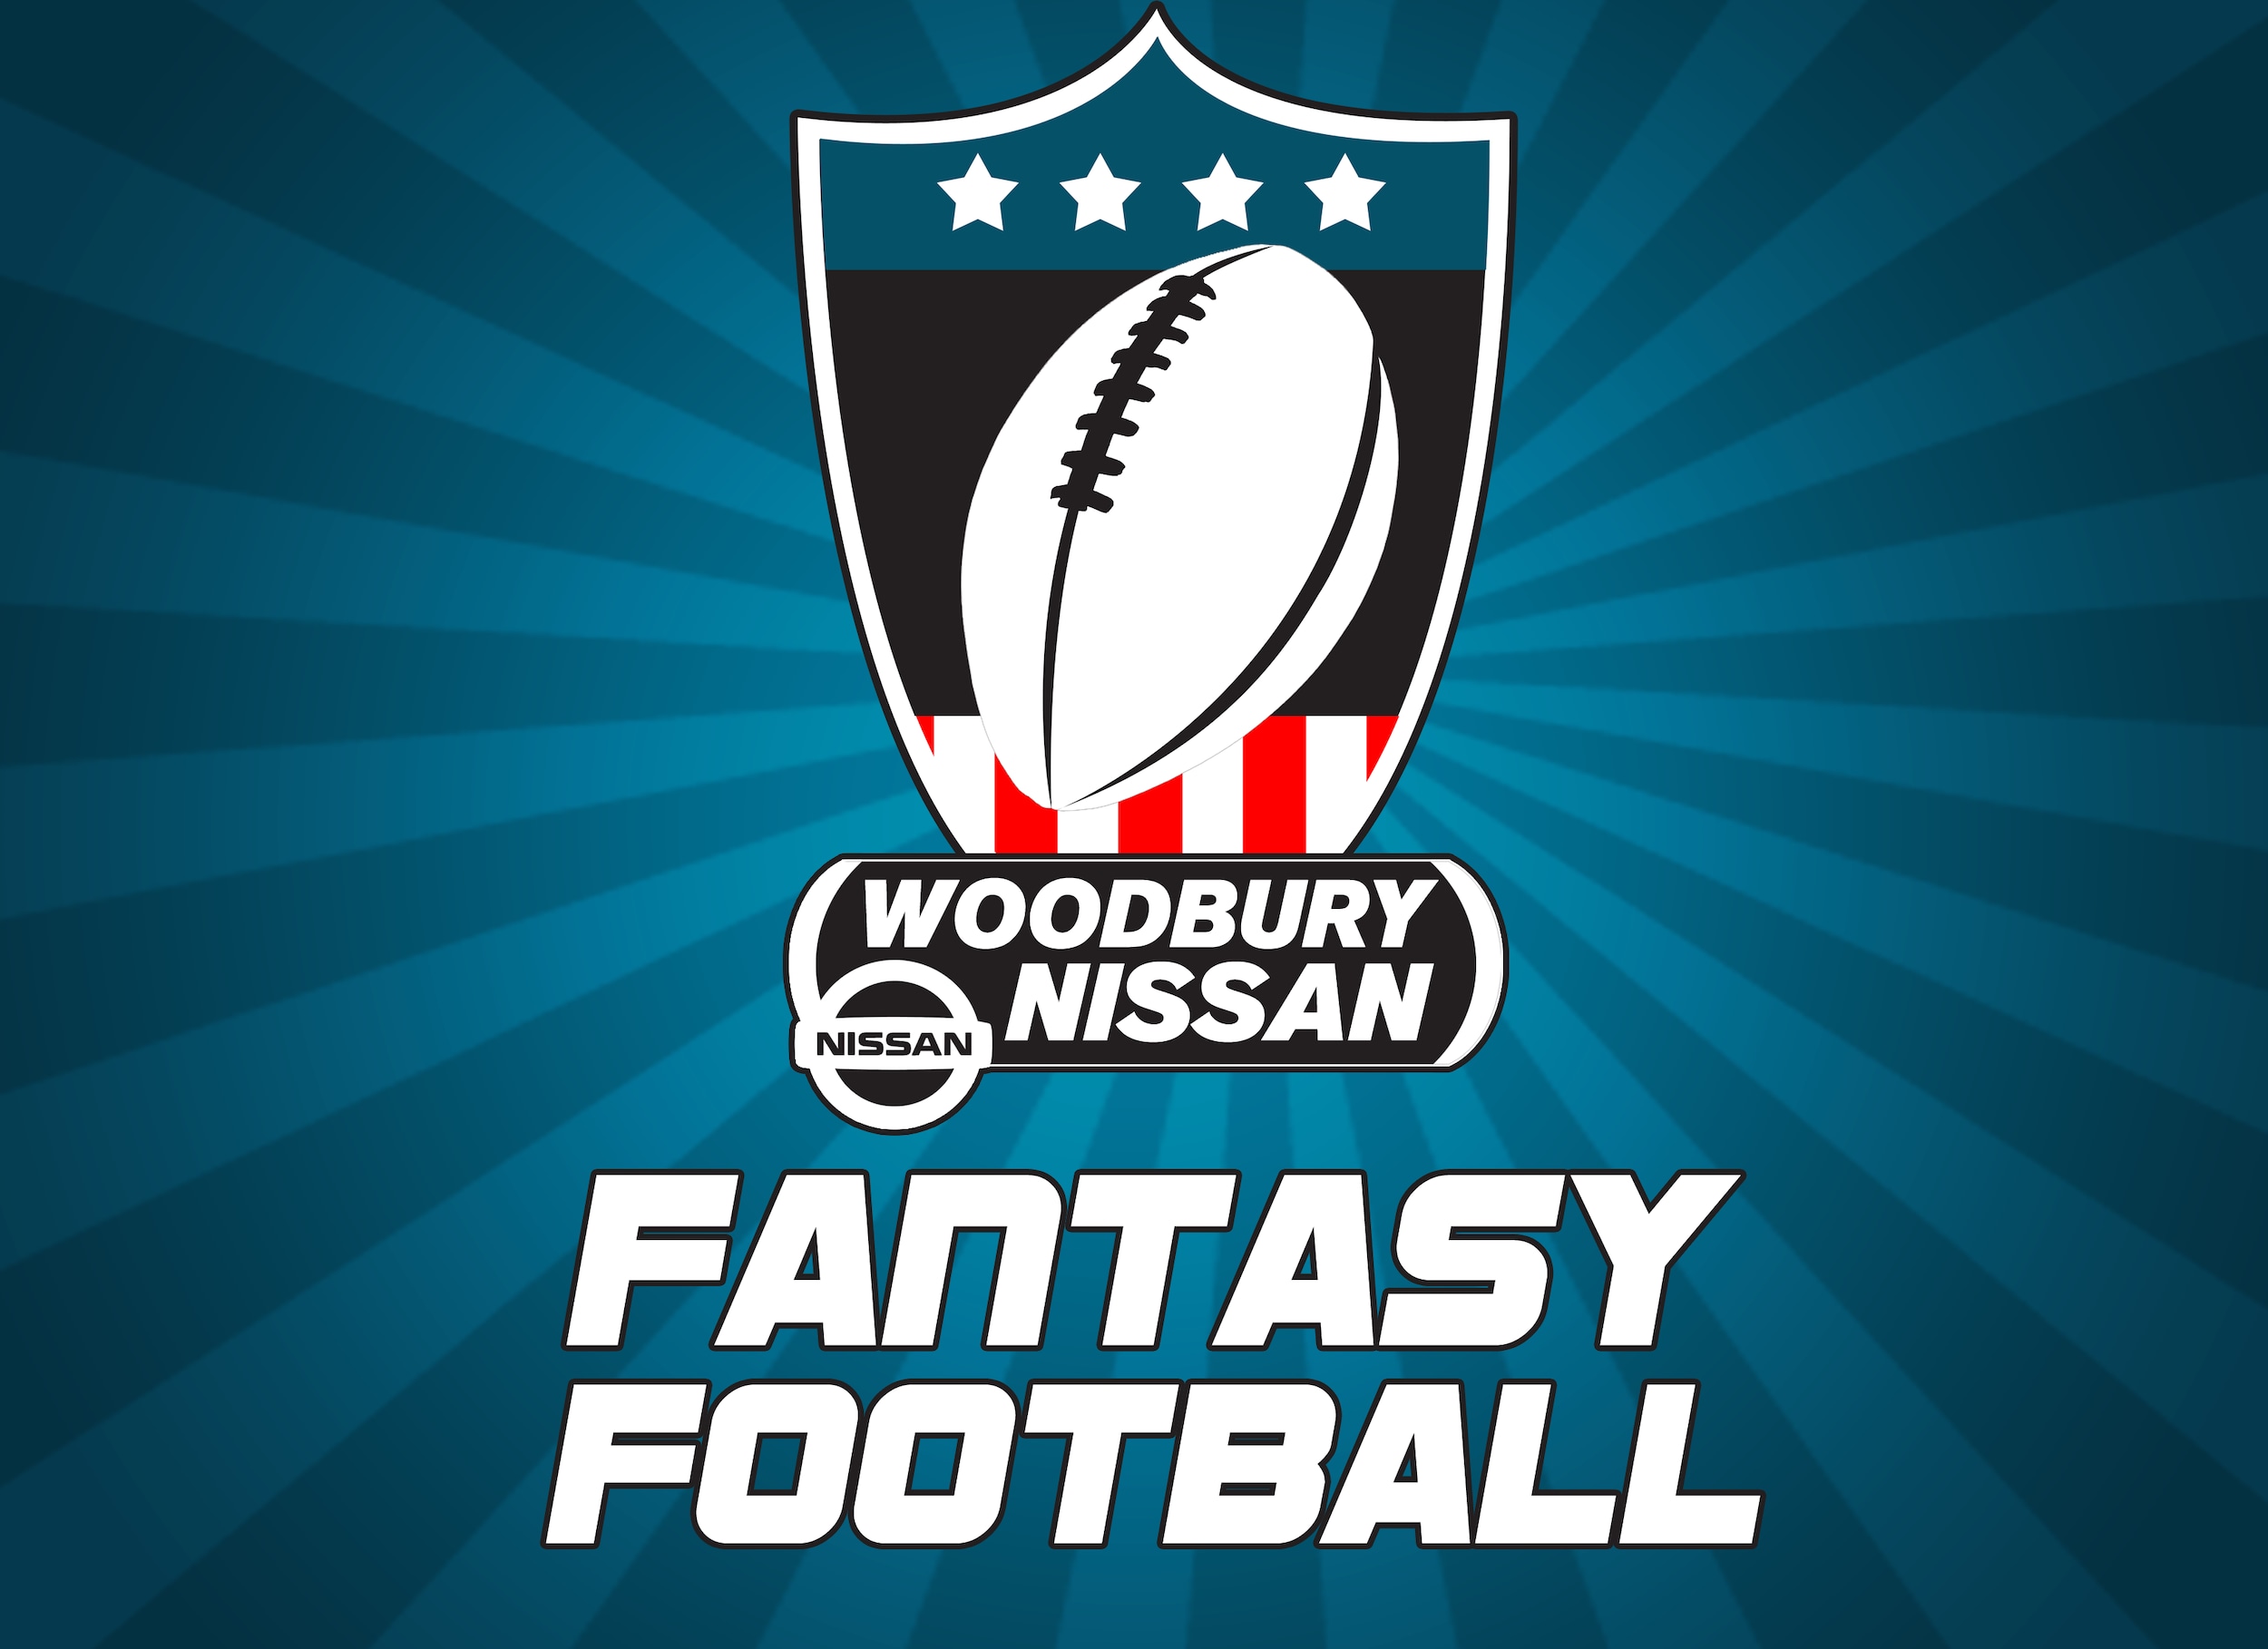 Woodbury nissan fantasy football 2013 #1